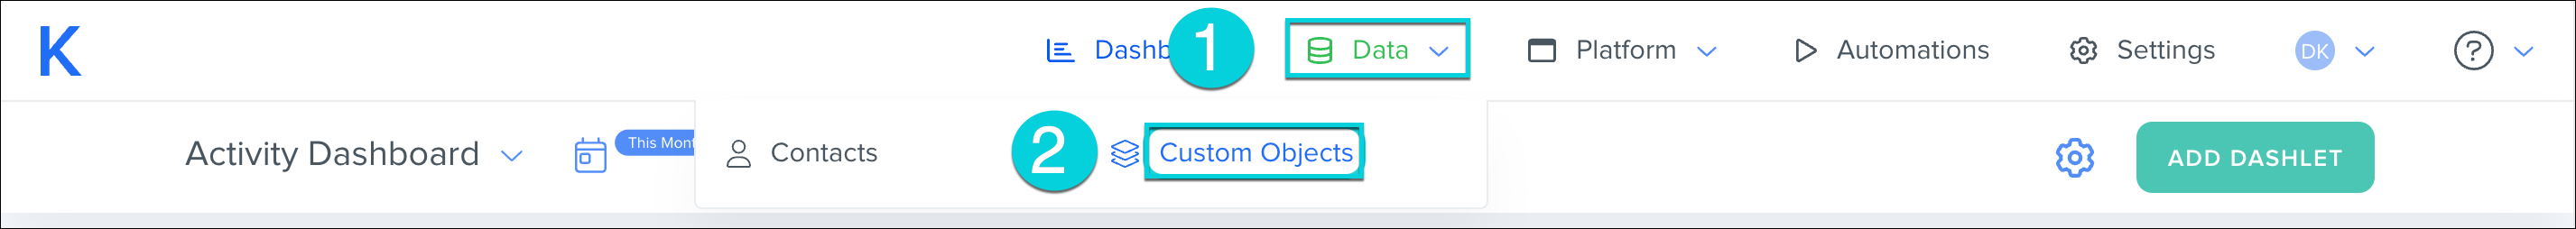 navigate_custom_objects.png